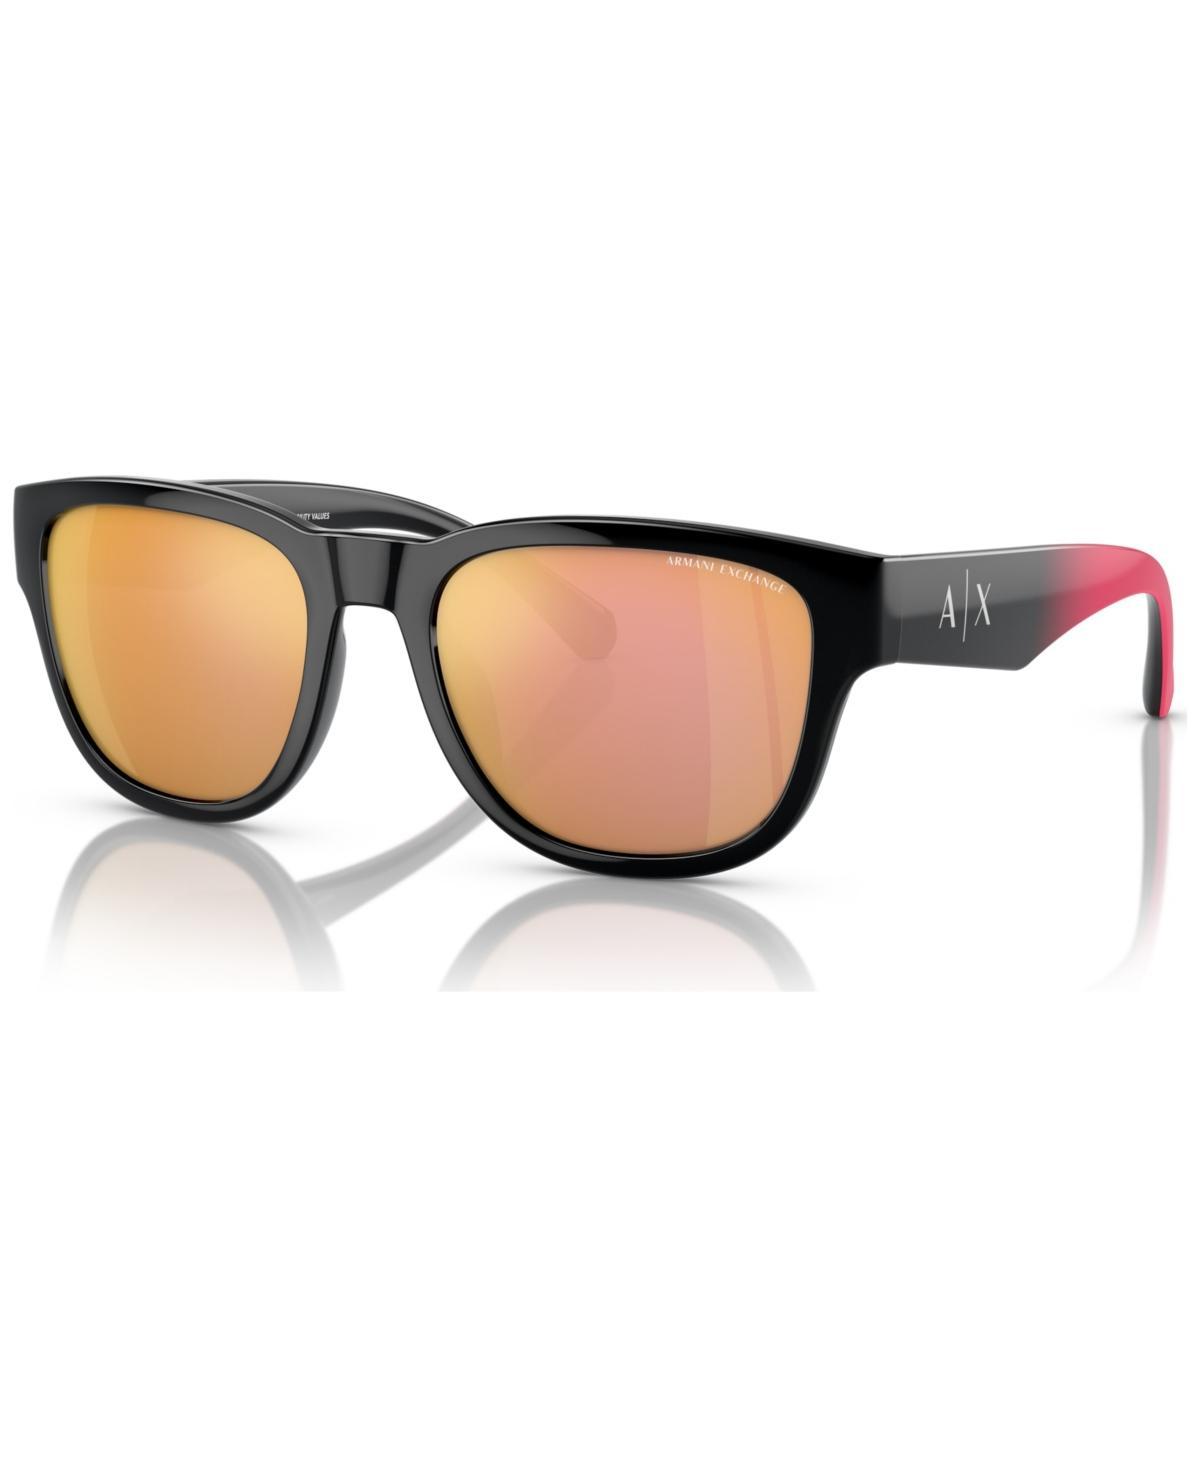 Armani Exchange 54mm Pillow Sunglasses Product Image